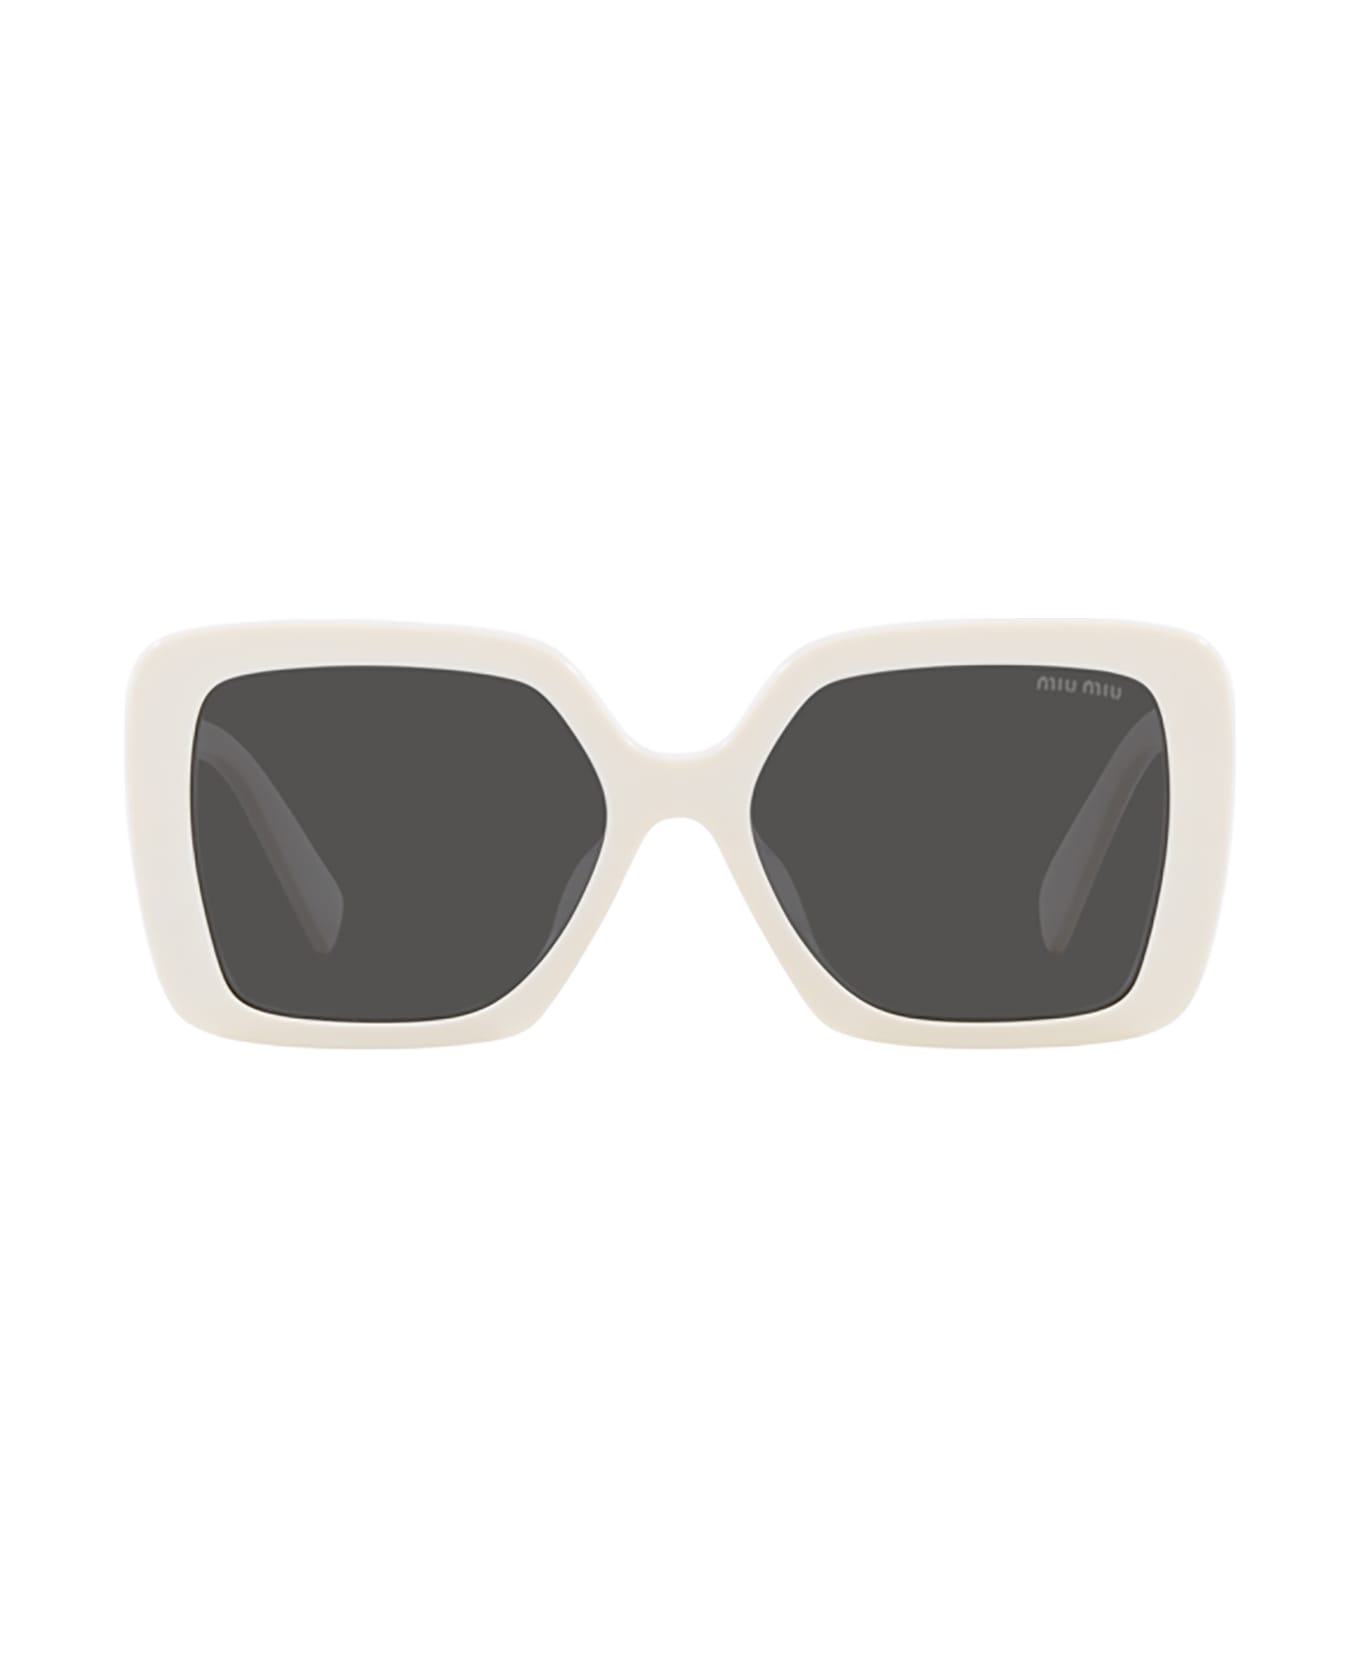 Miu Miu Eyewear Mu 10ys White Sunglasses - White